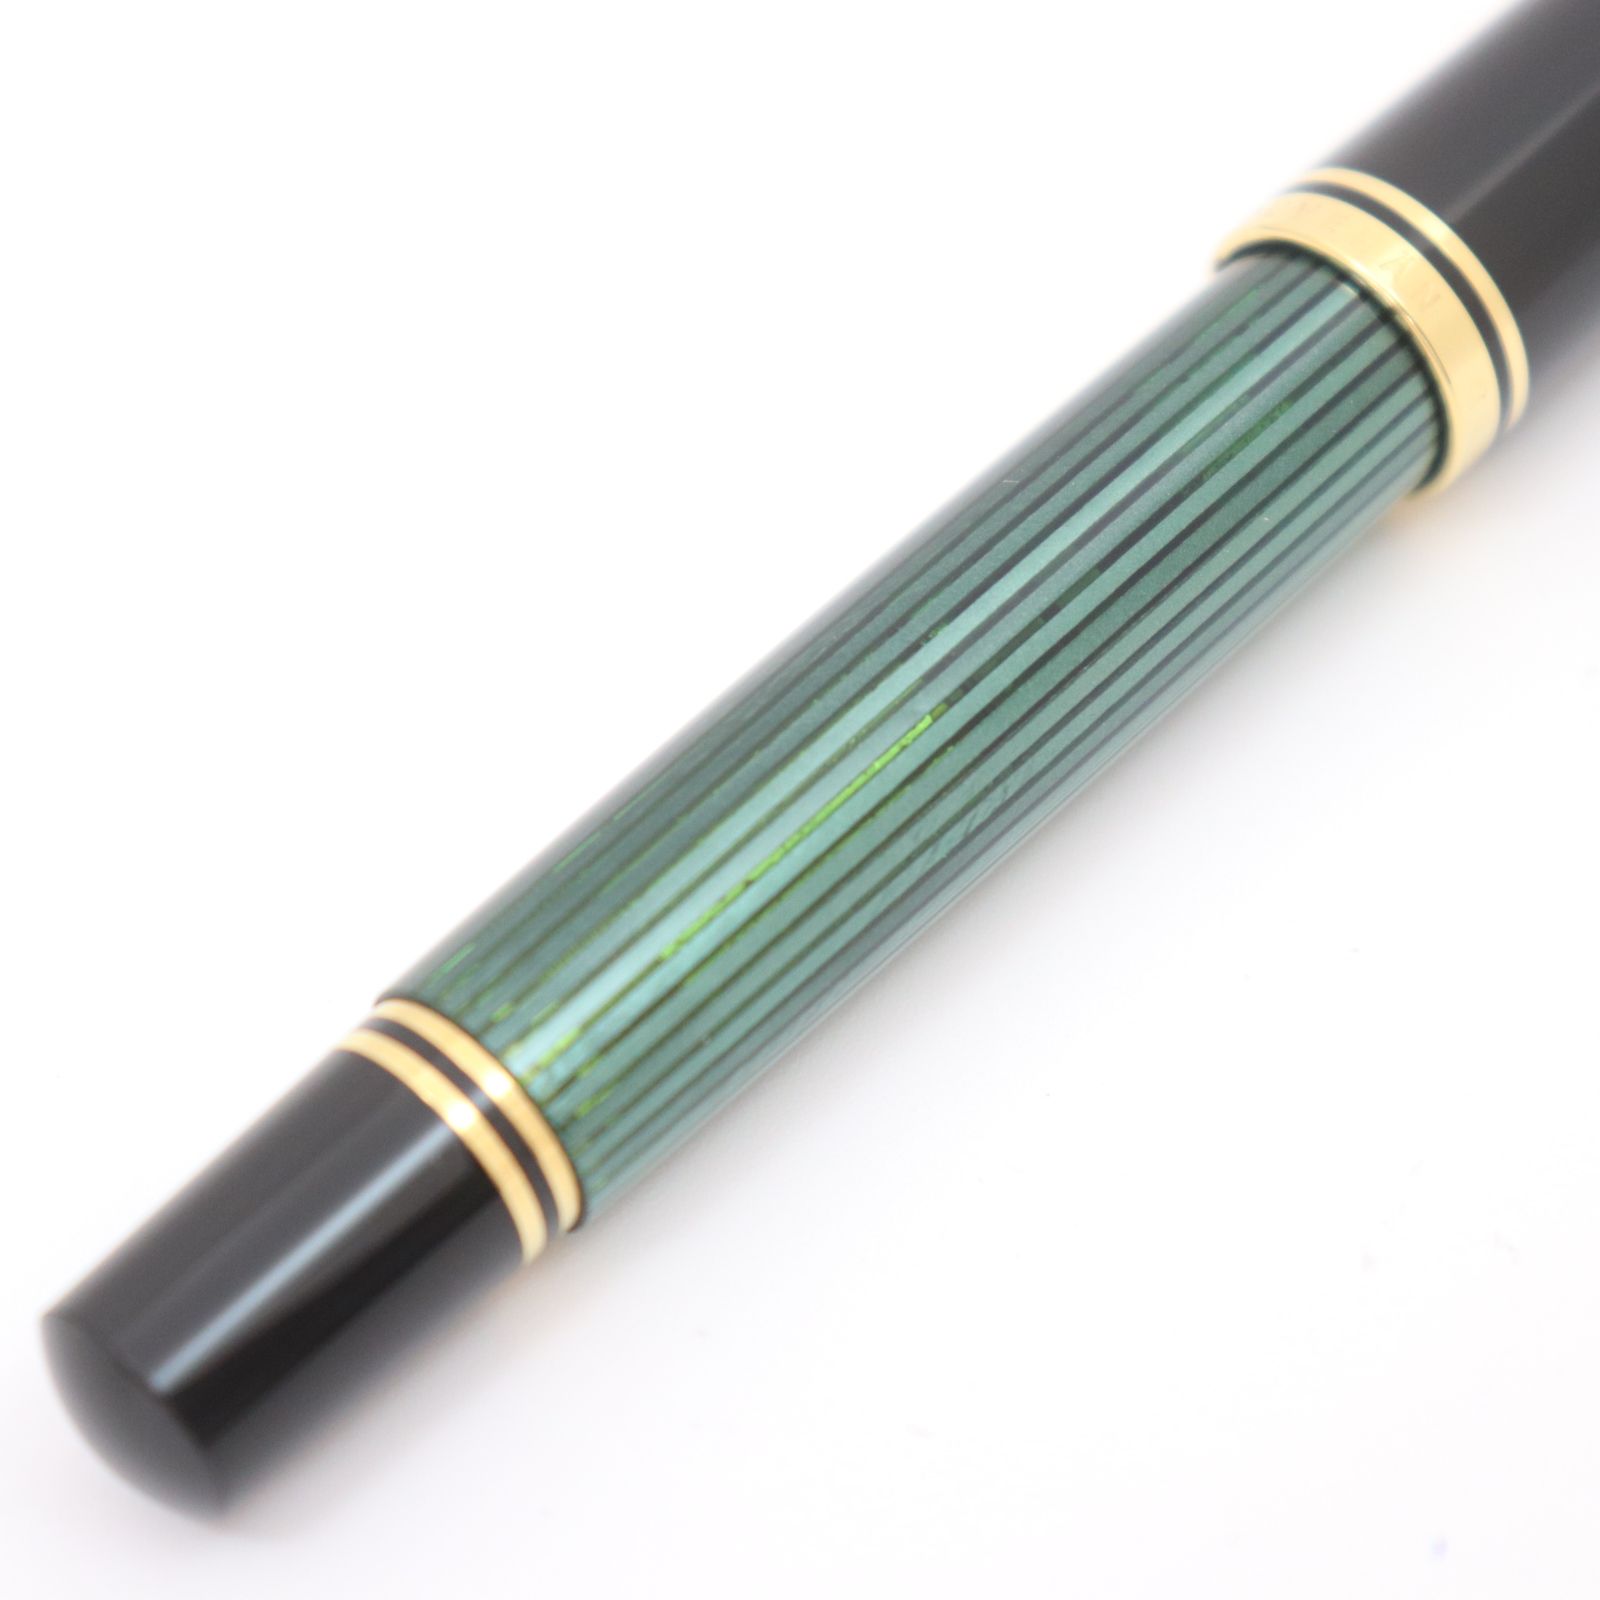 ITPJZDDKASY6 ペリカン スーベレーン 18C-750 グリーンストライプ 緑 万年筆 ペン 文具 筆記具 ケース